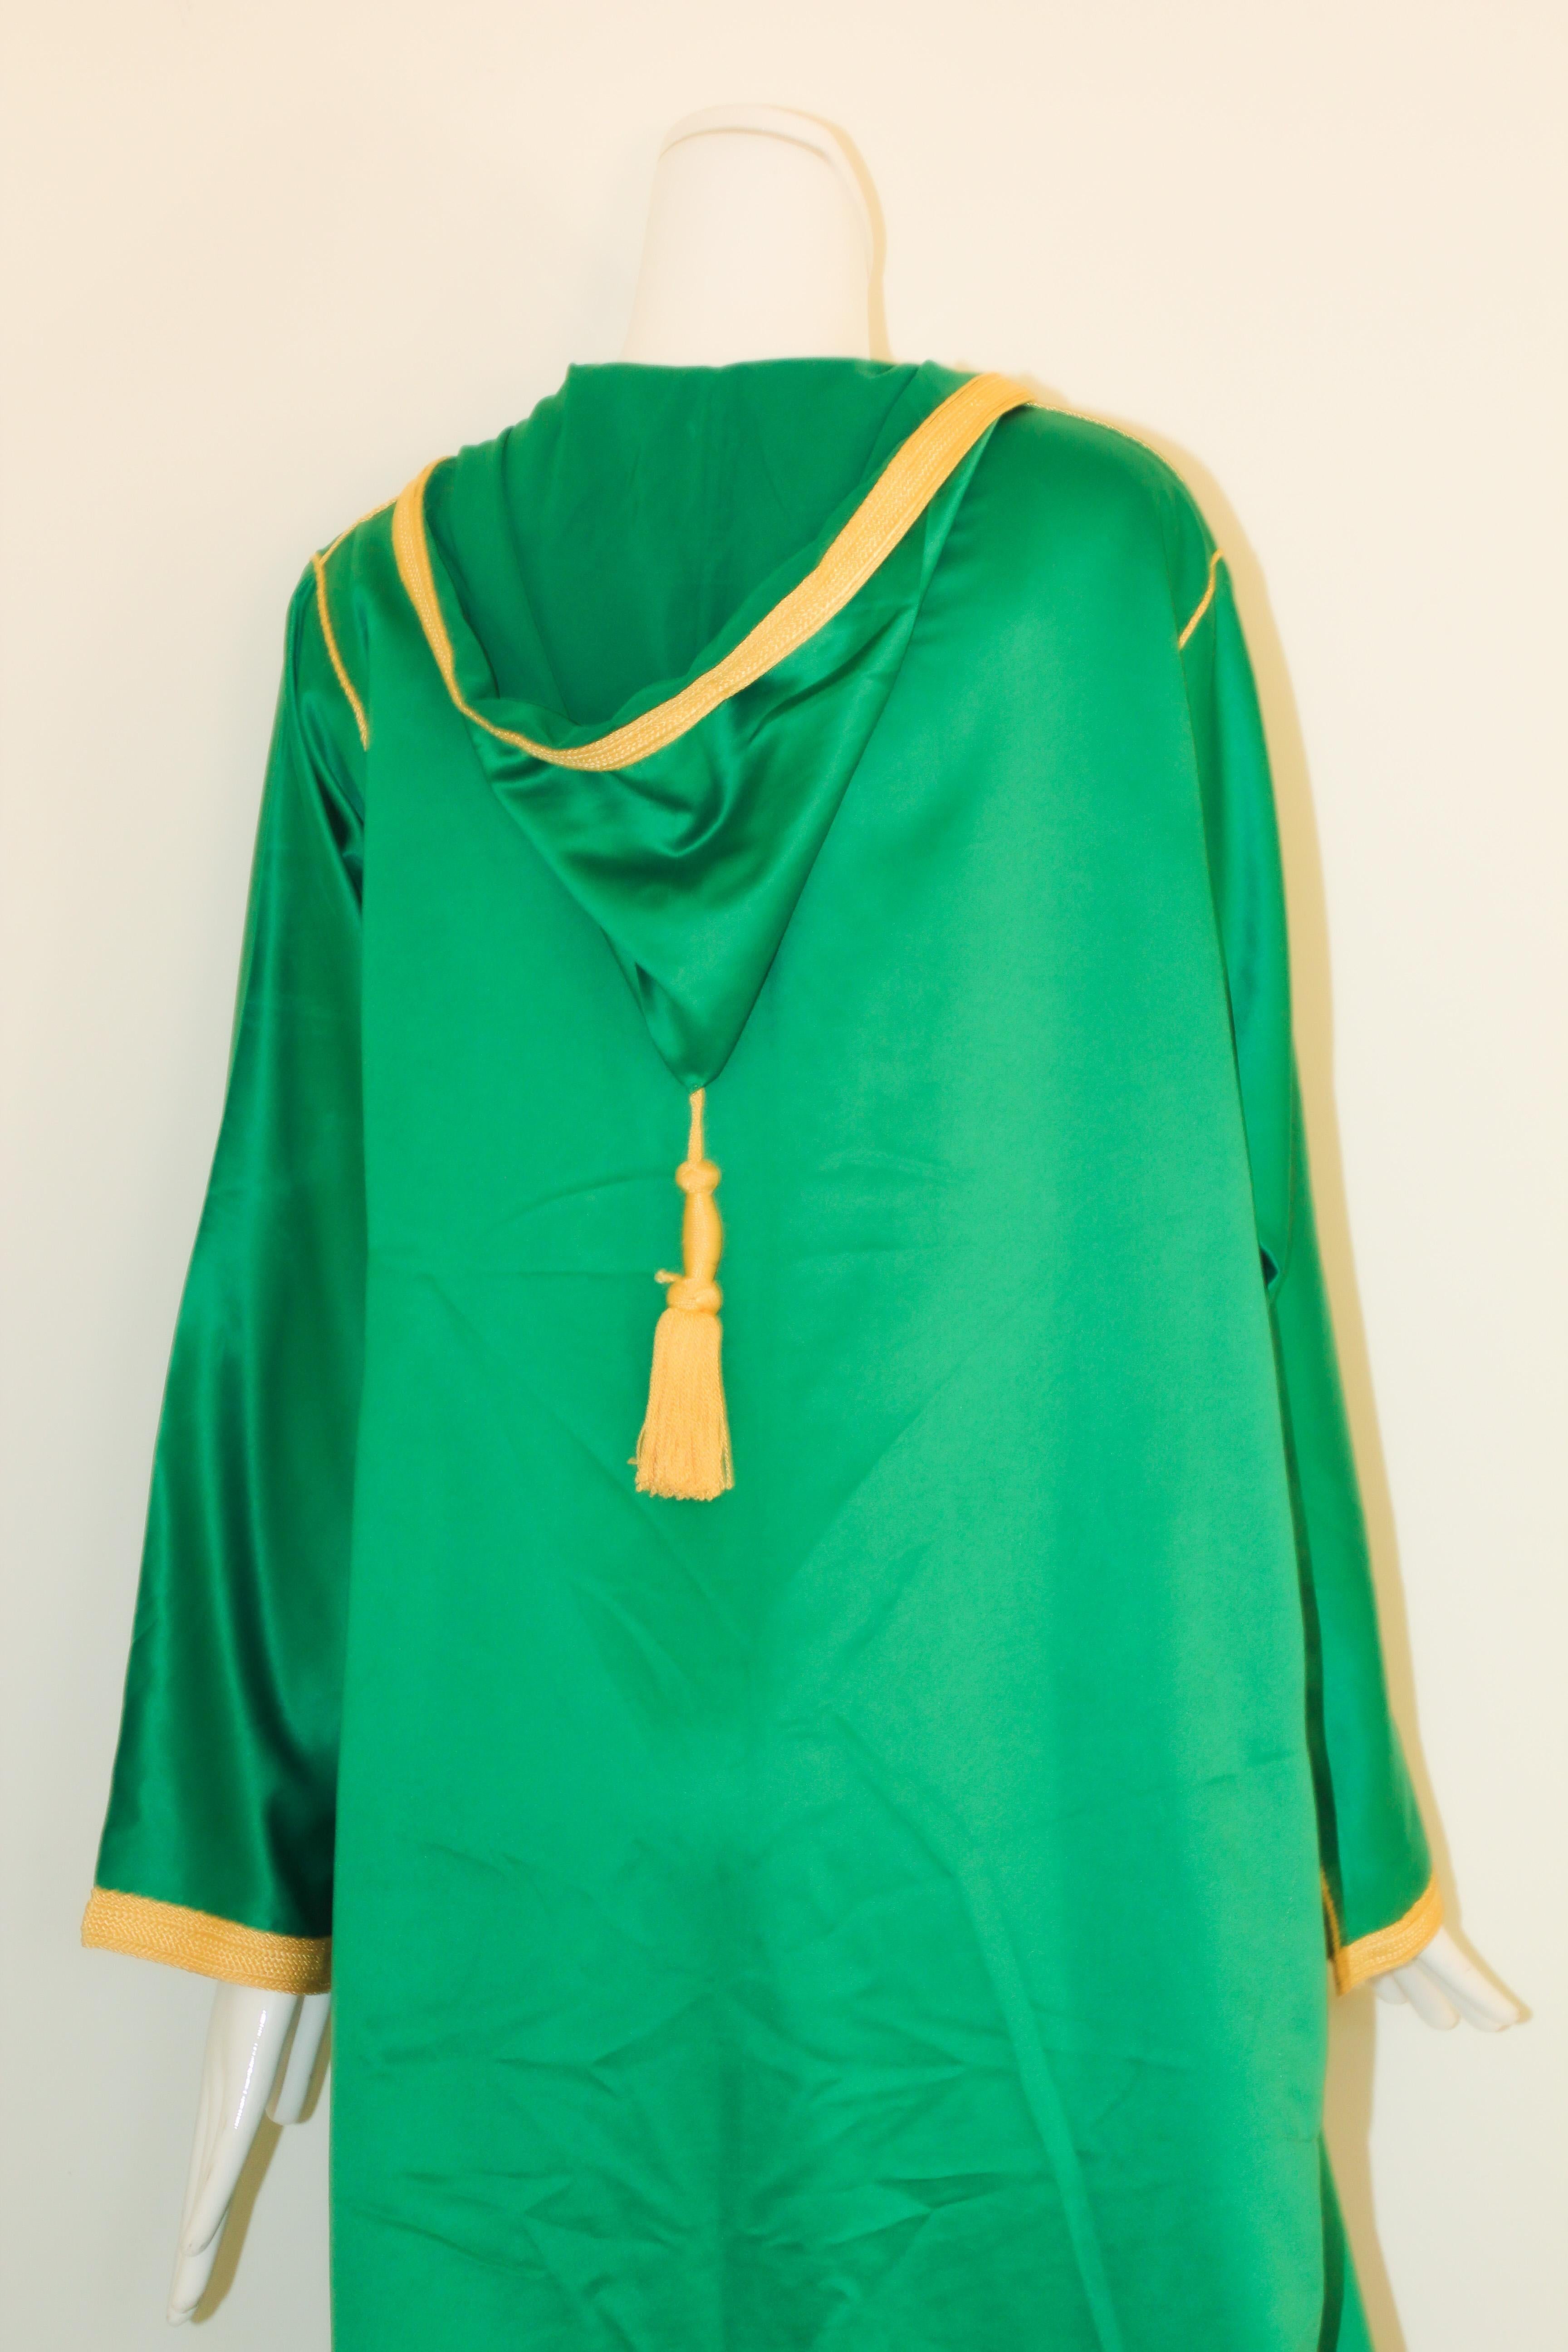 Caftan marocain à capuche Djellabah vert émeraude avec capuche en vente 6